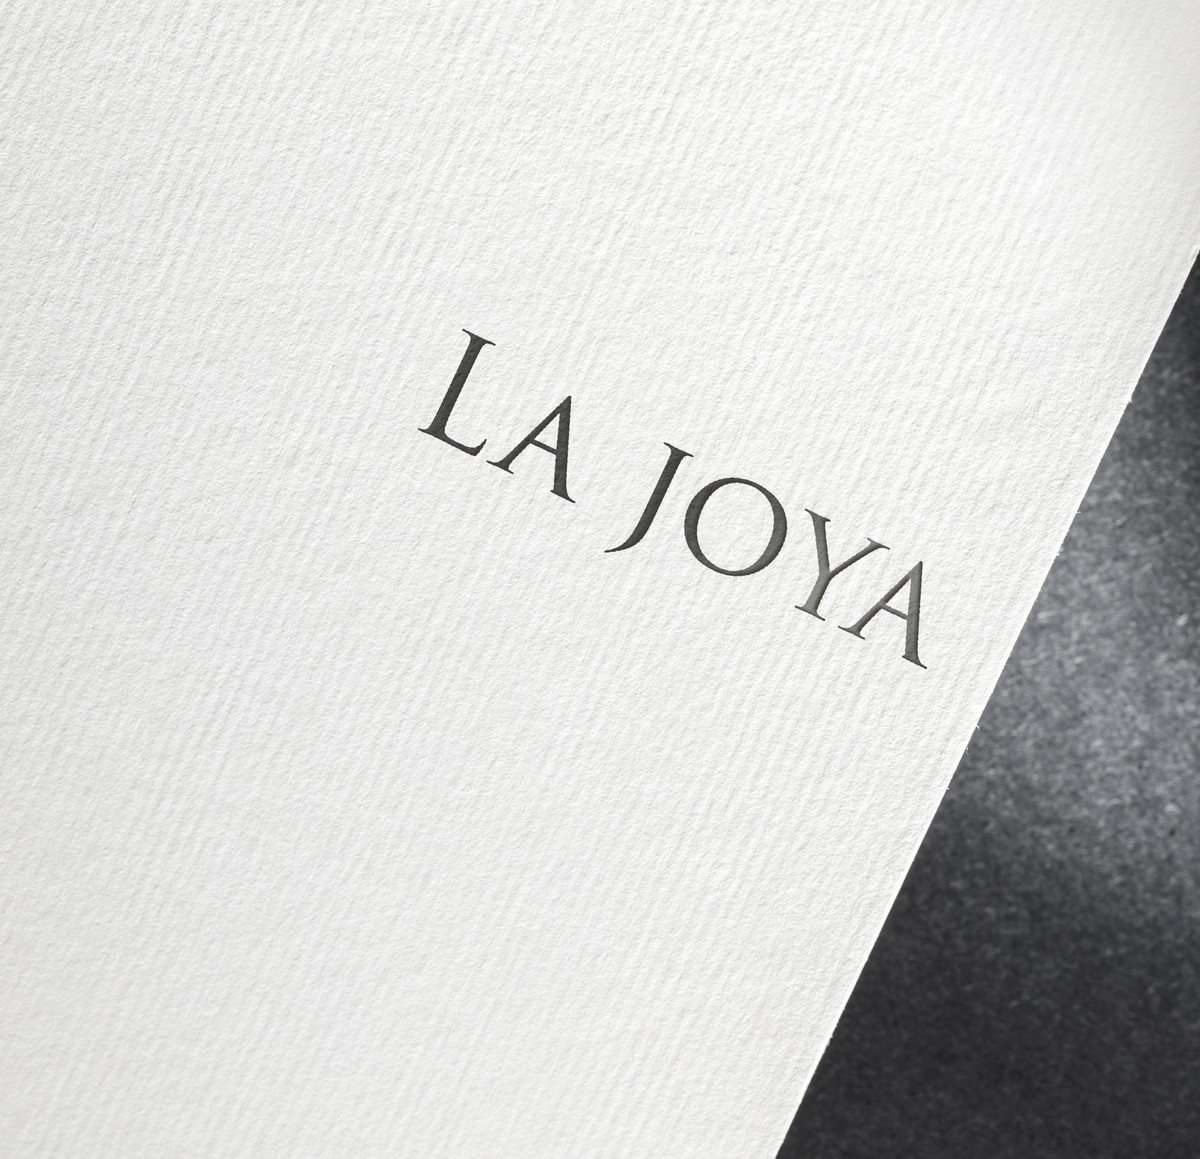 LOGO Design in | ..lajoya.ku